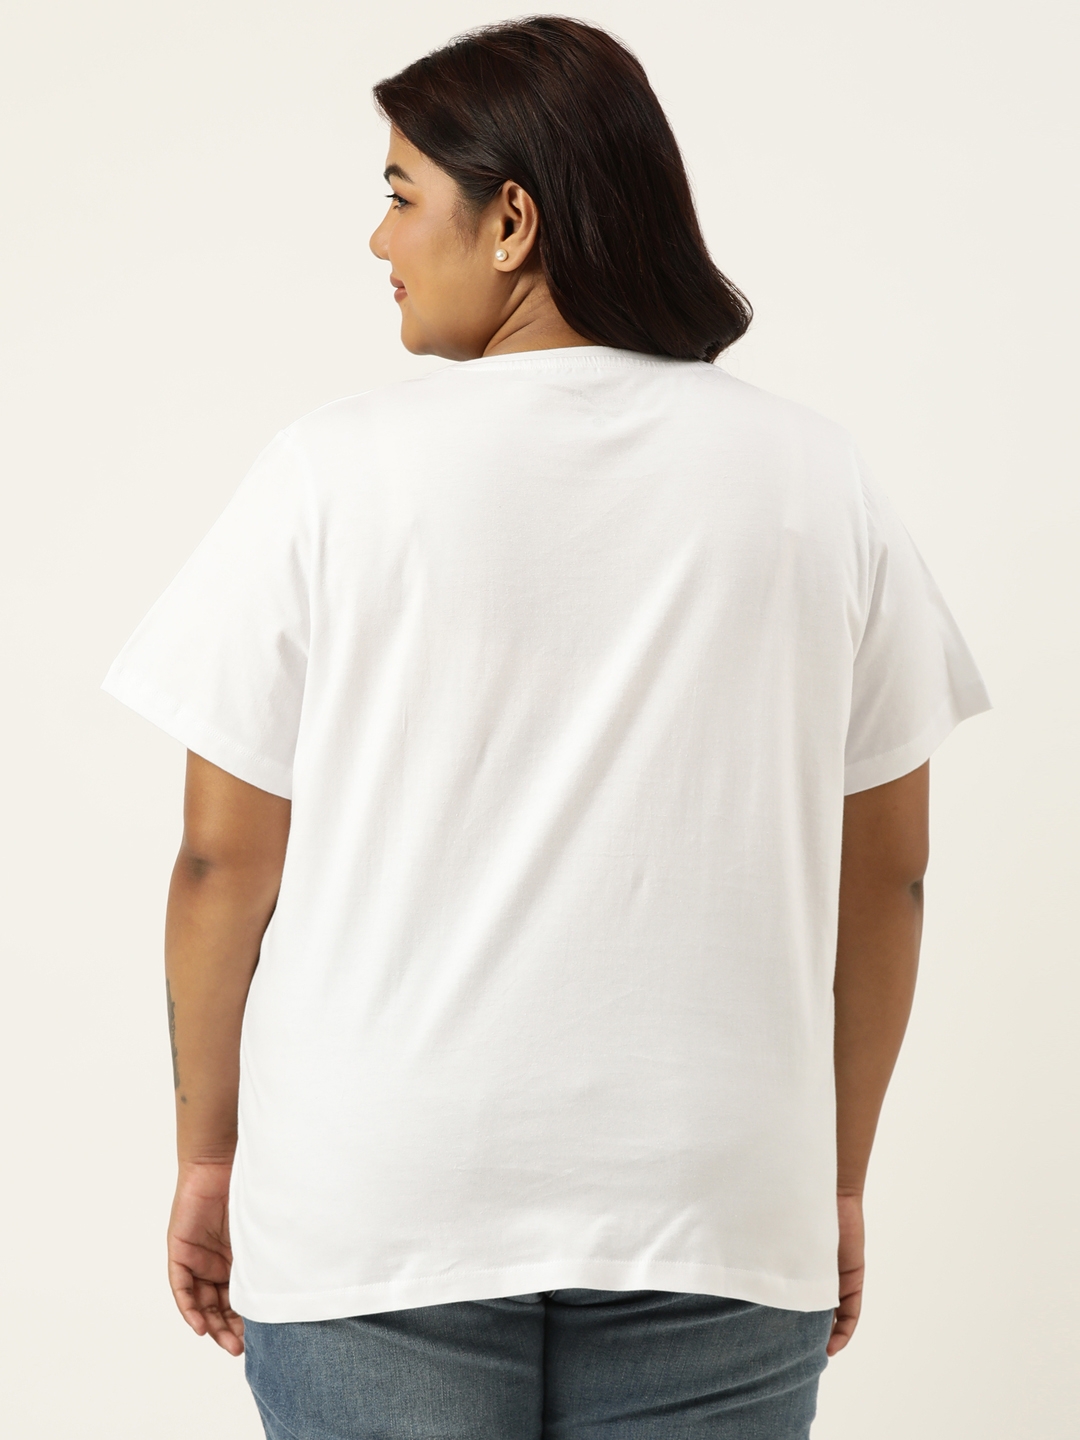 Plus Size White Graphic Printed Round Neck Bio Wash tshirt For women